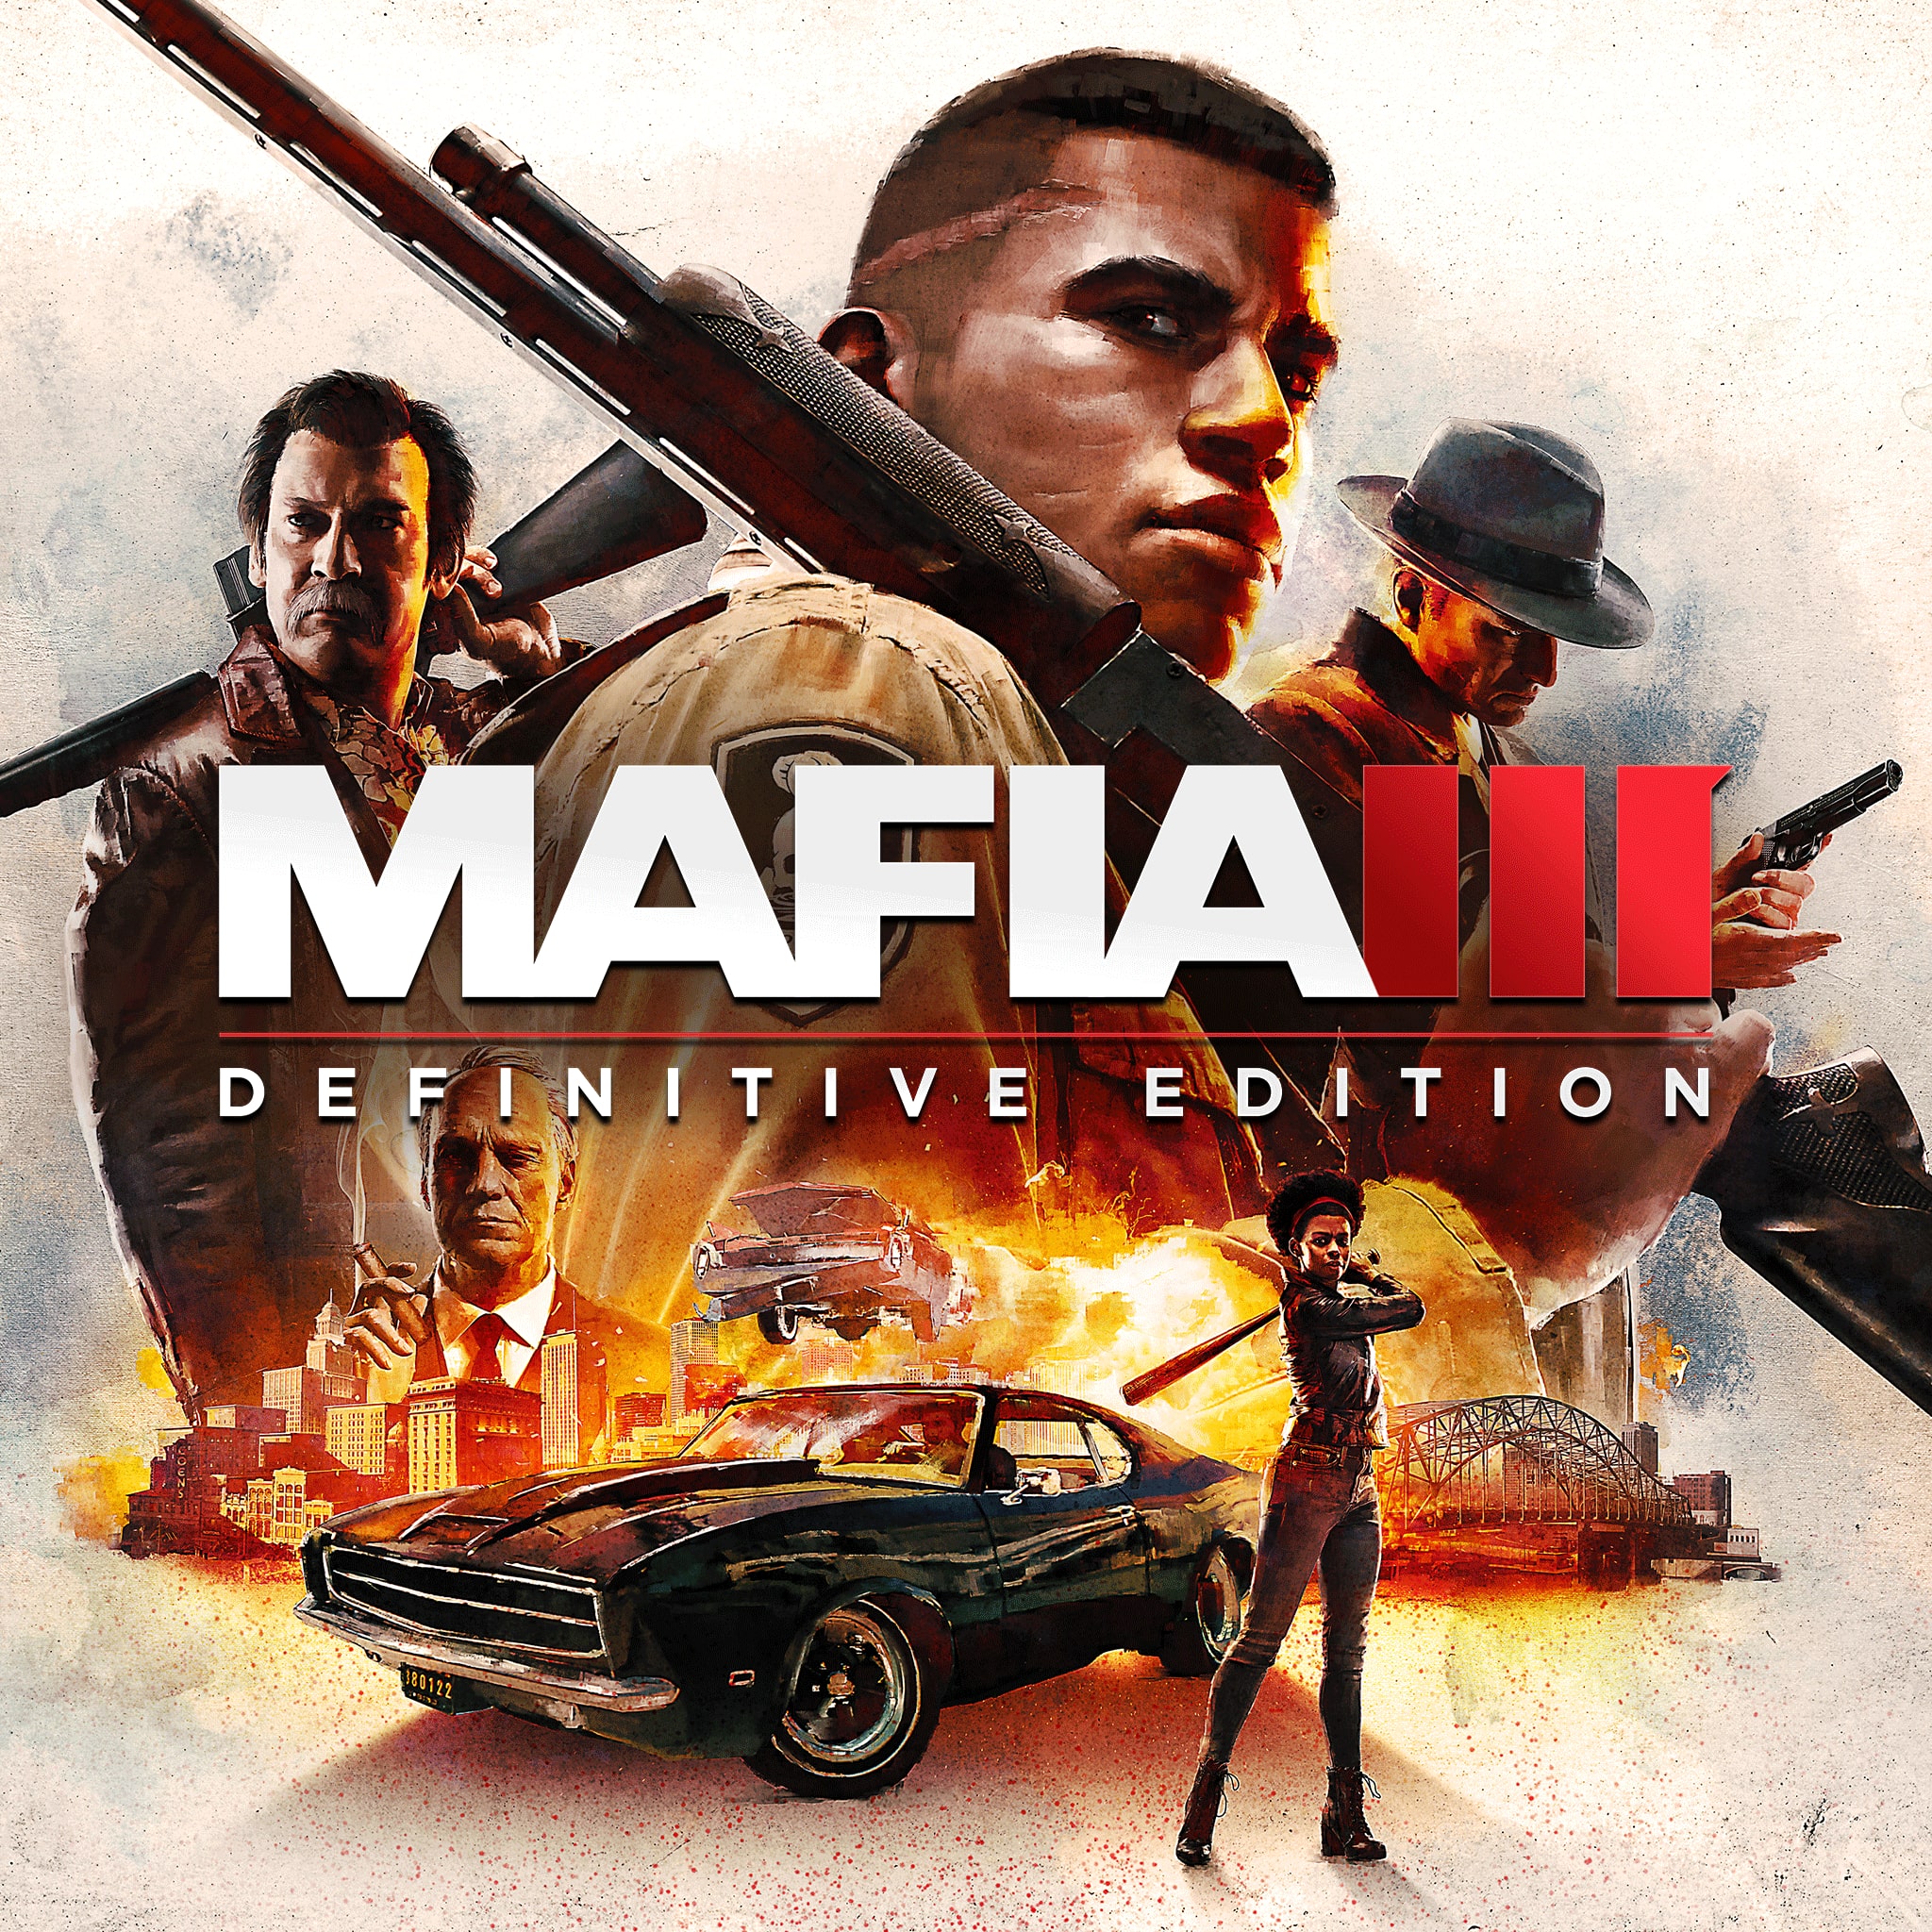 Accidental Ambient Dismissal Mafia III: Definitive Edition